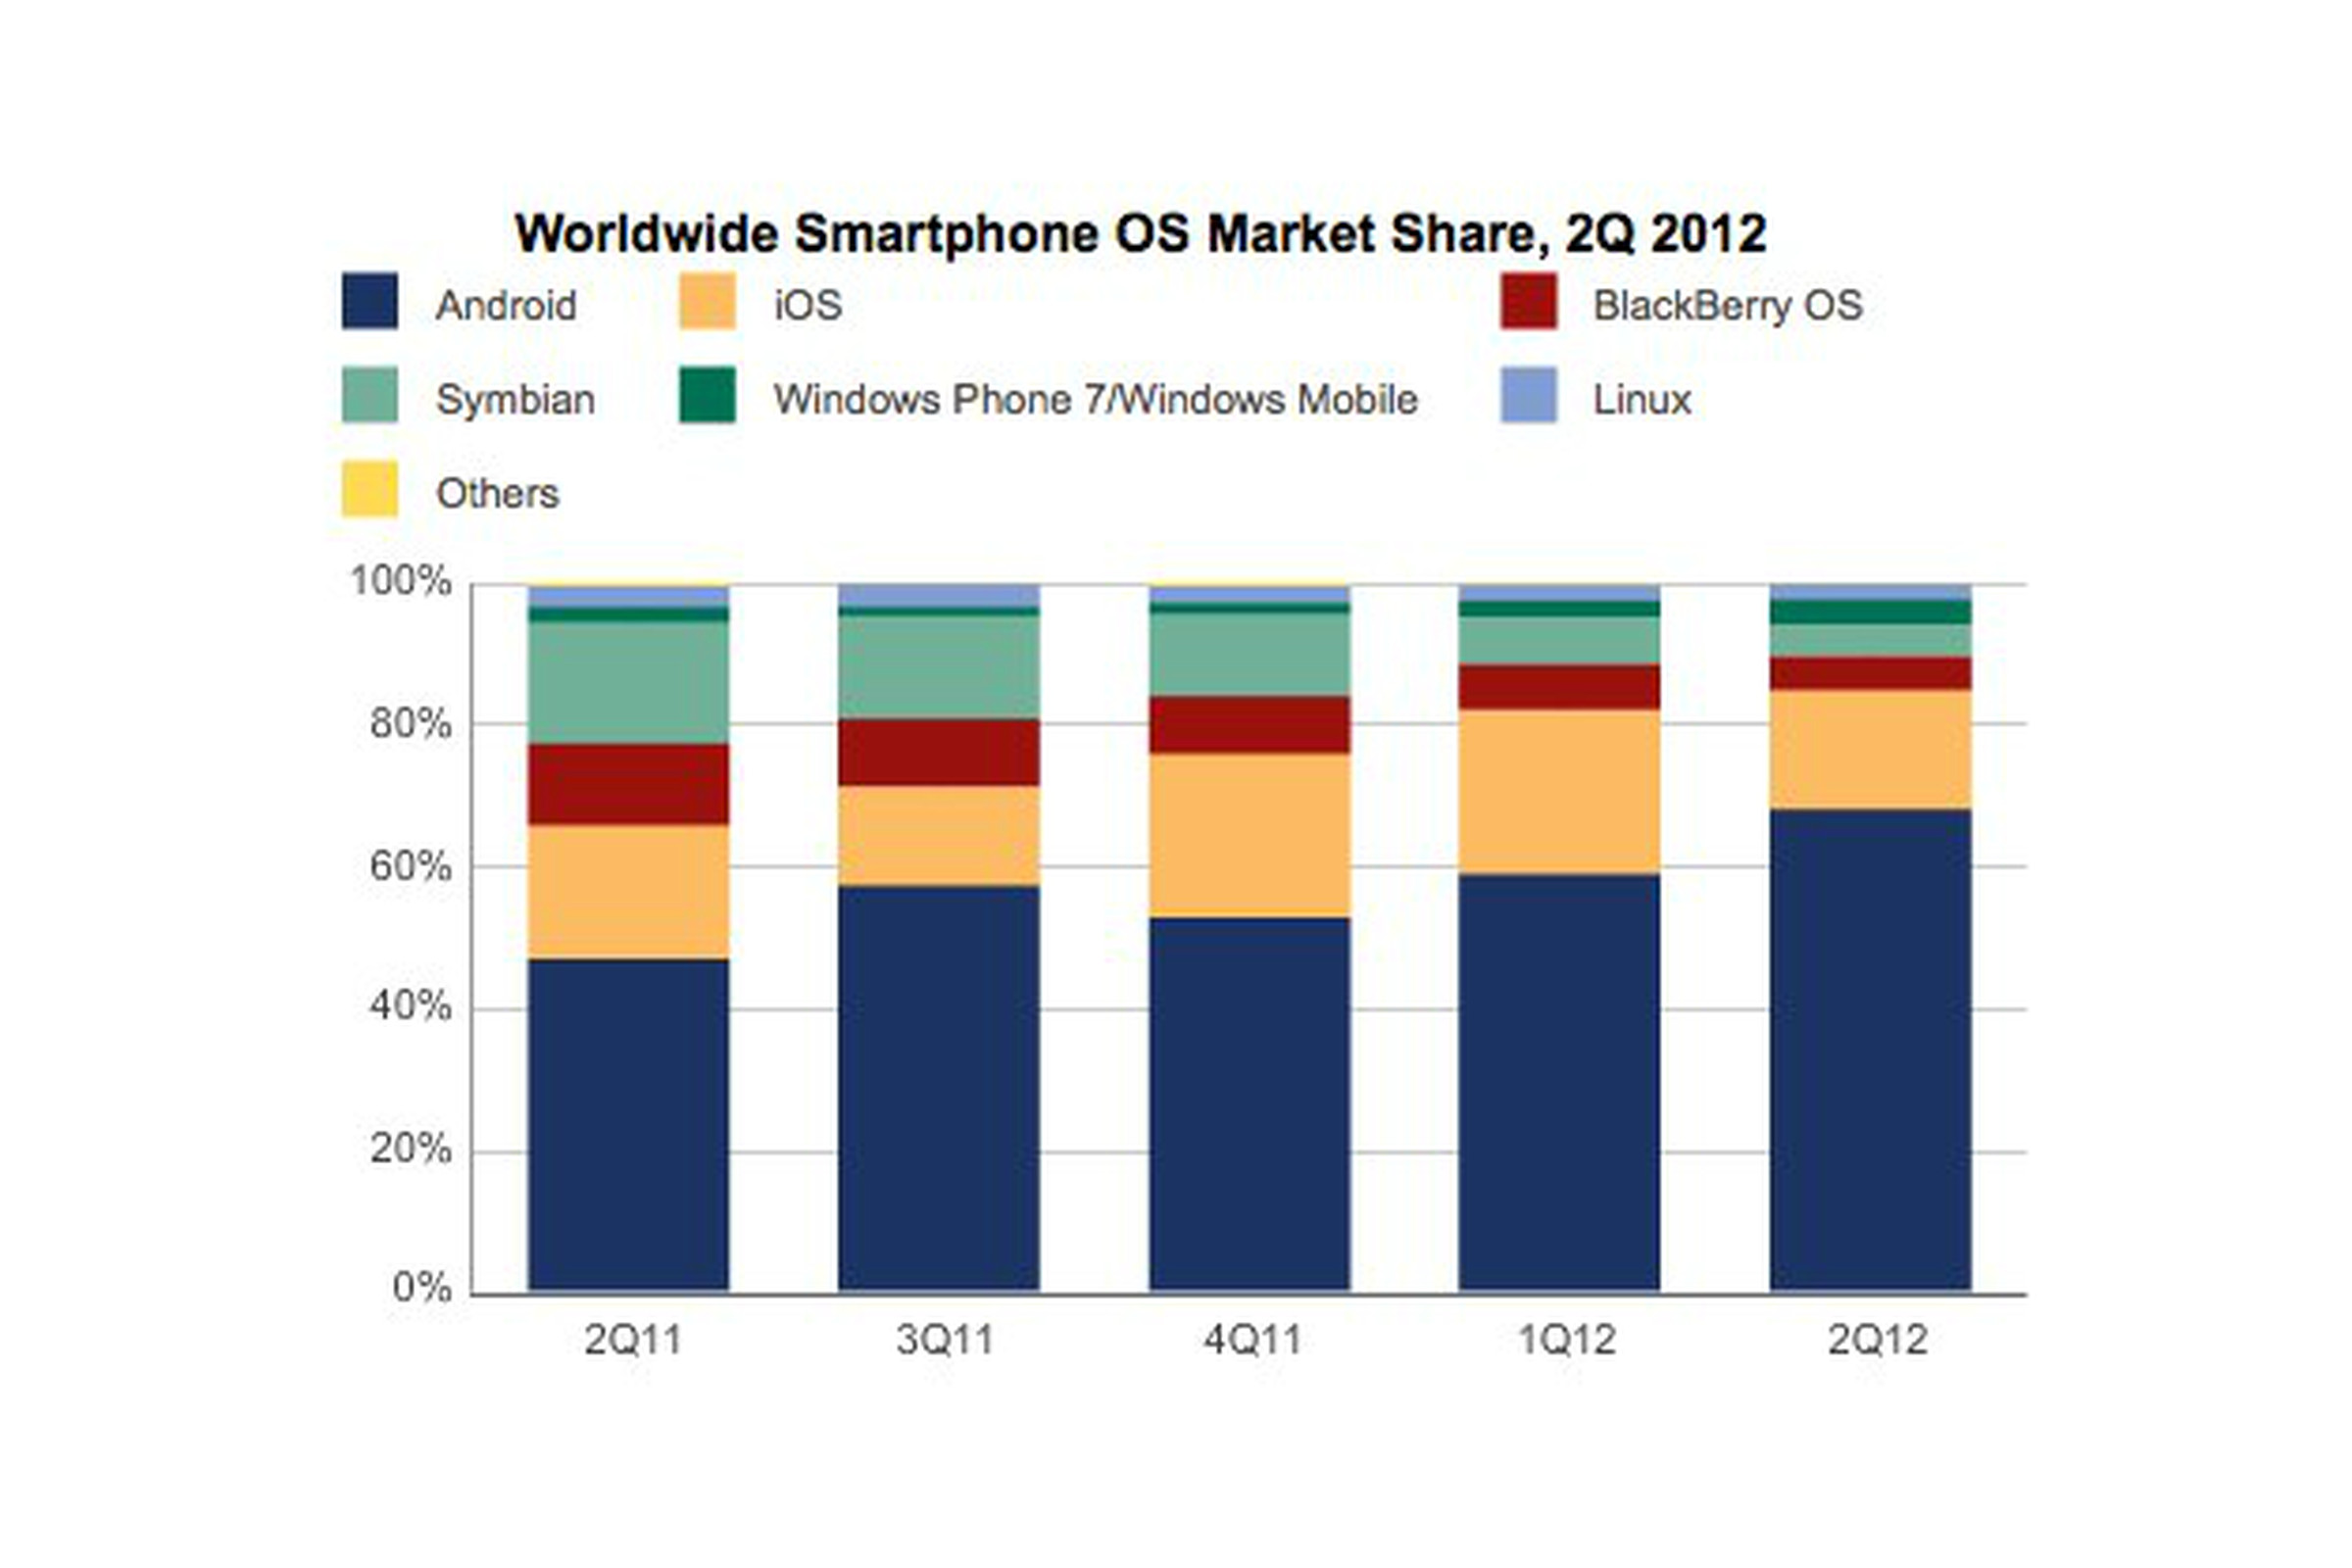 IDC Q2 2012 OS market share